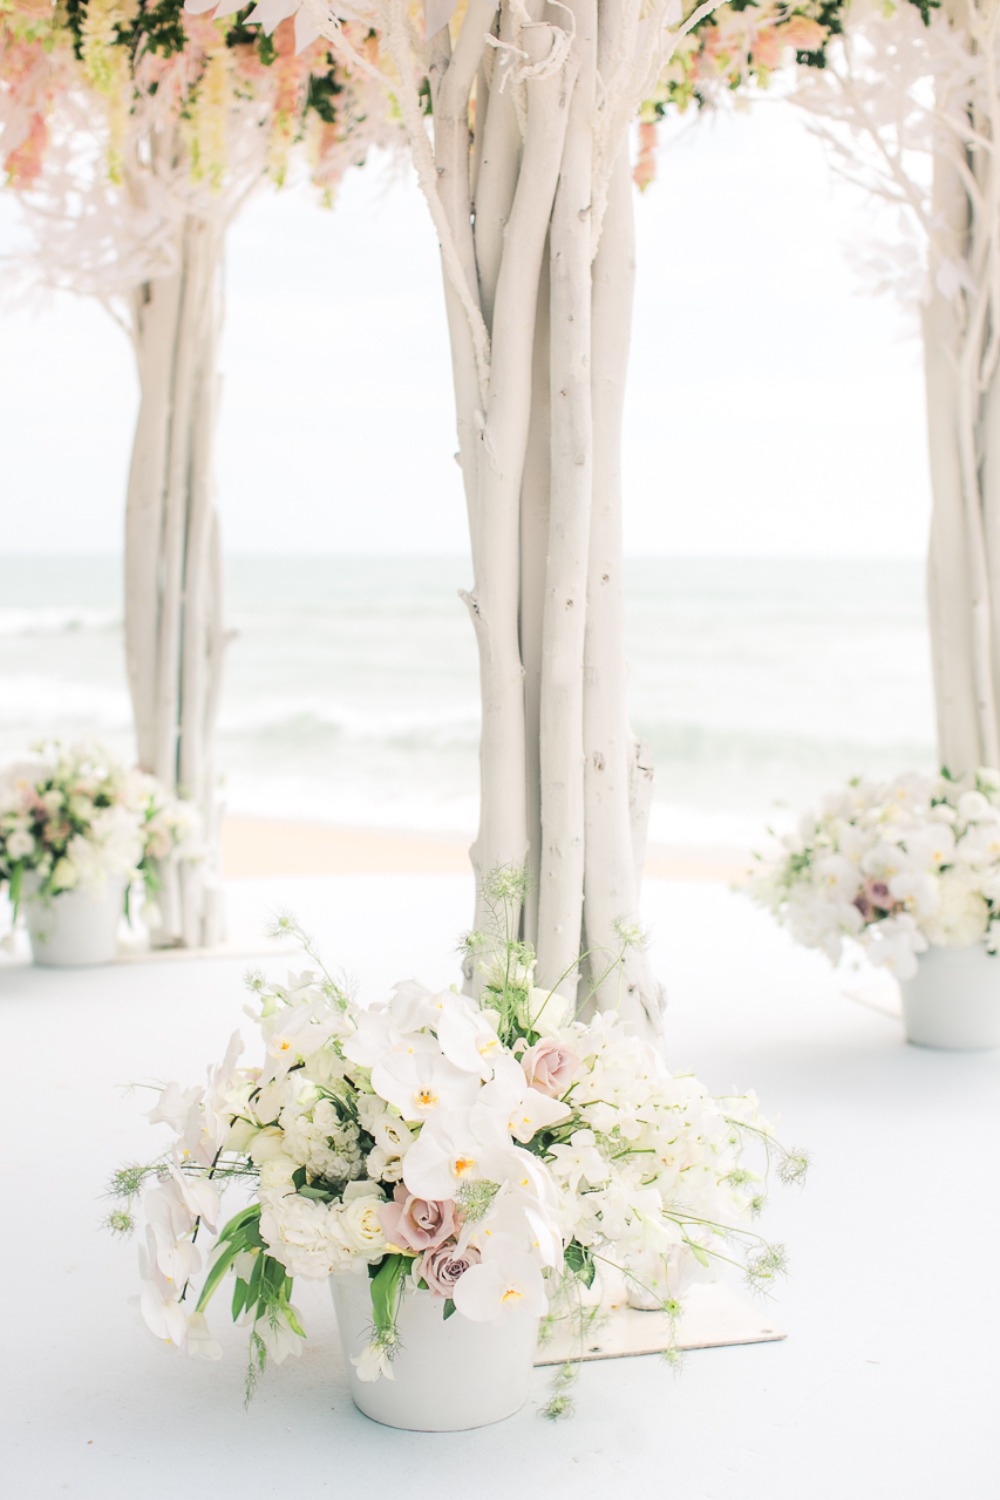 Ceremony florals for a beach wedding